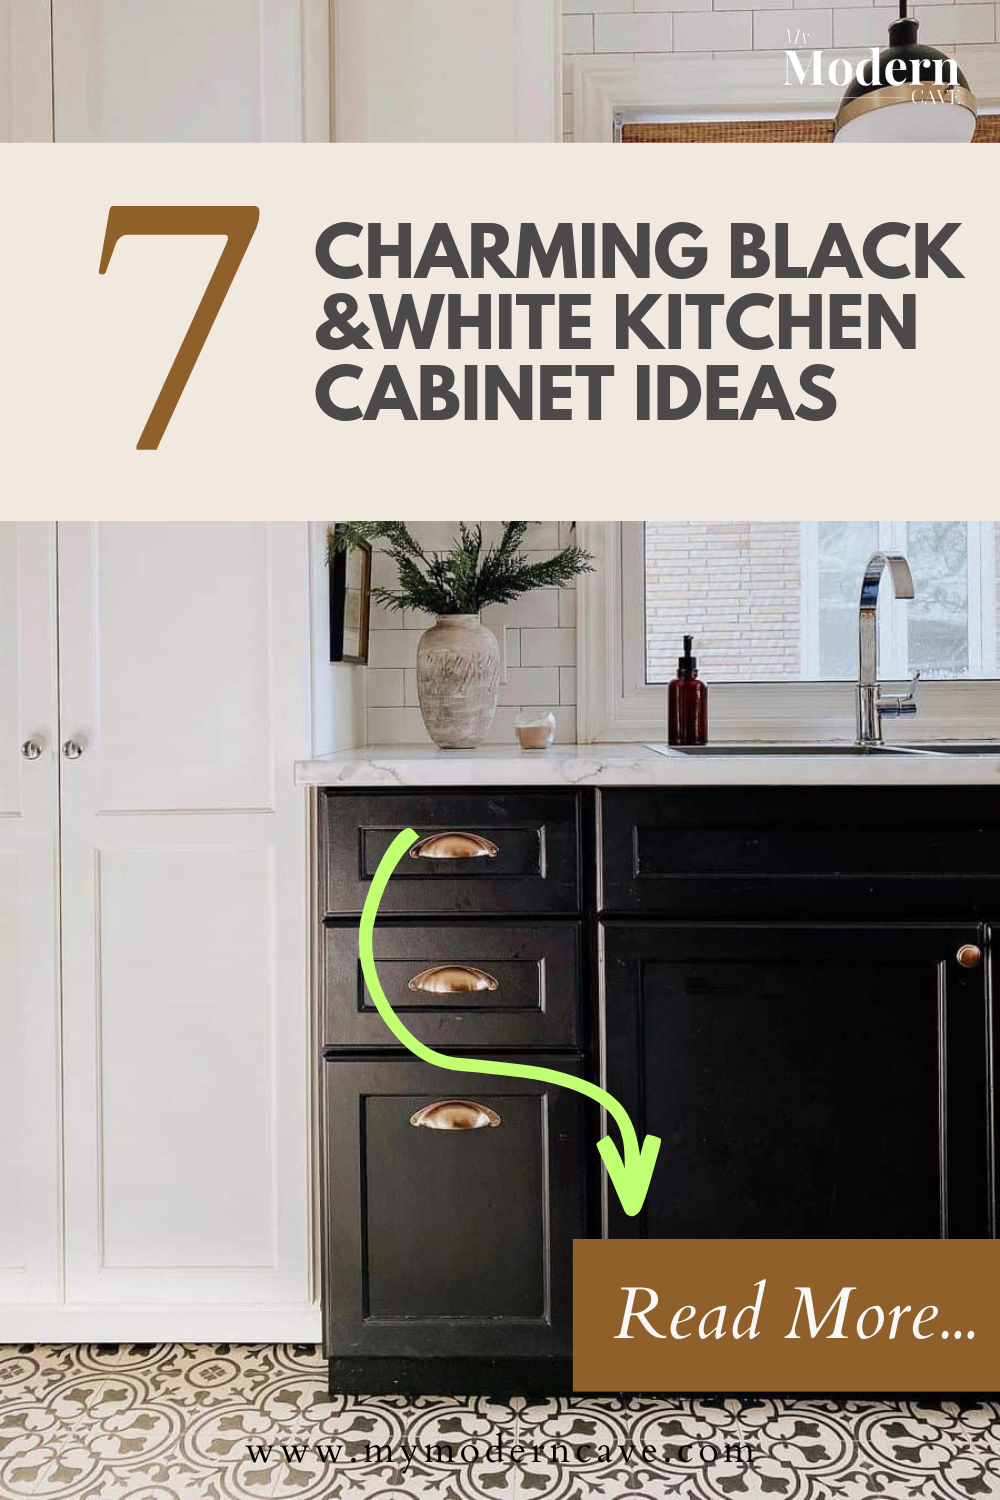 Black &White Kitchen Cabinet Ideas Infographic